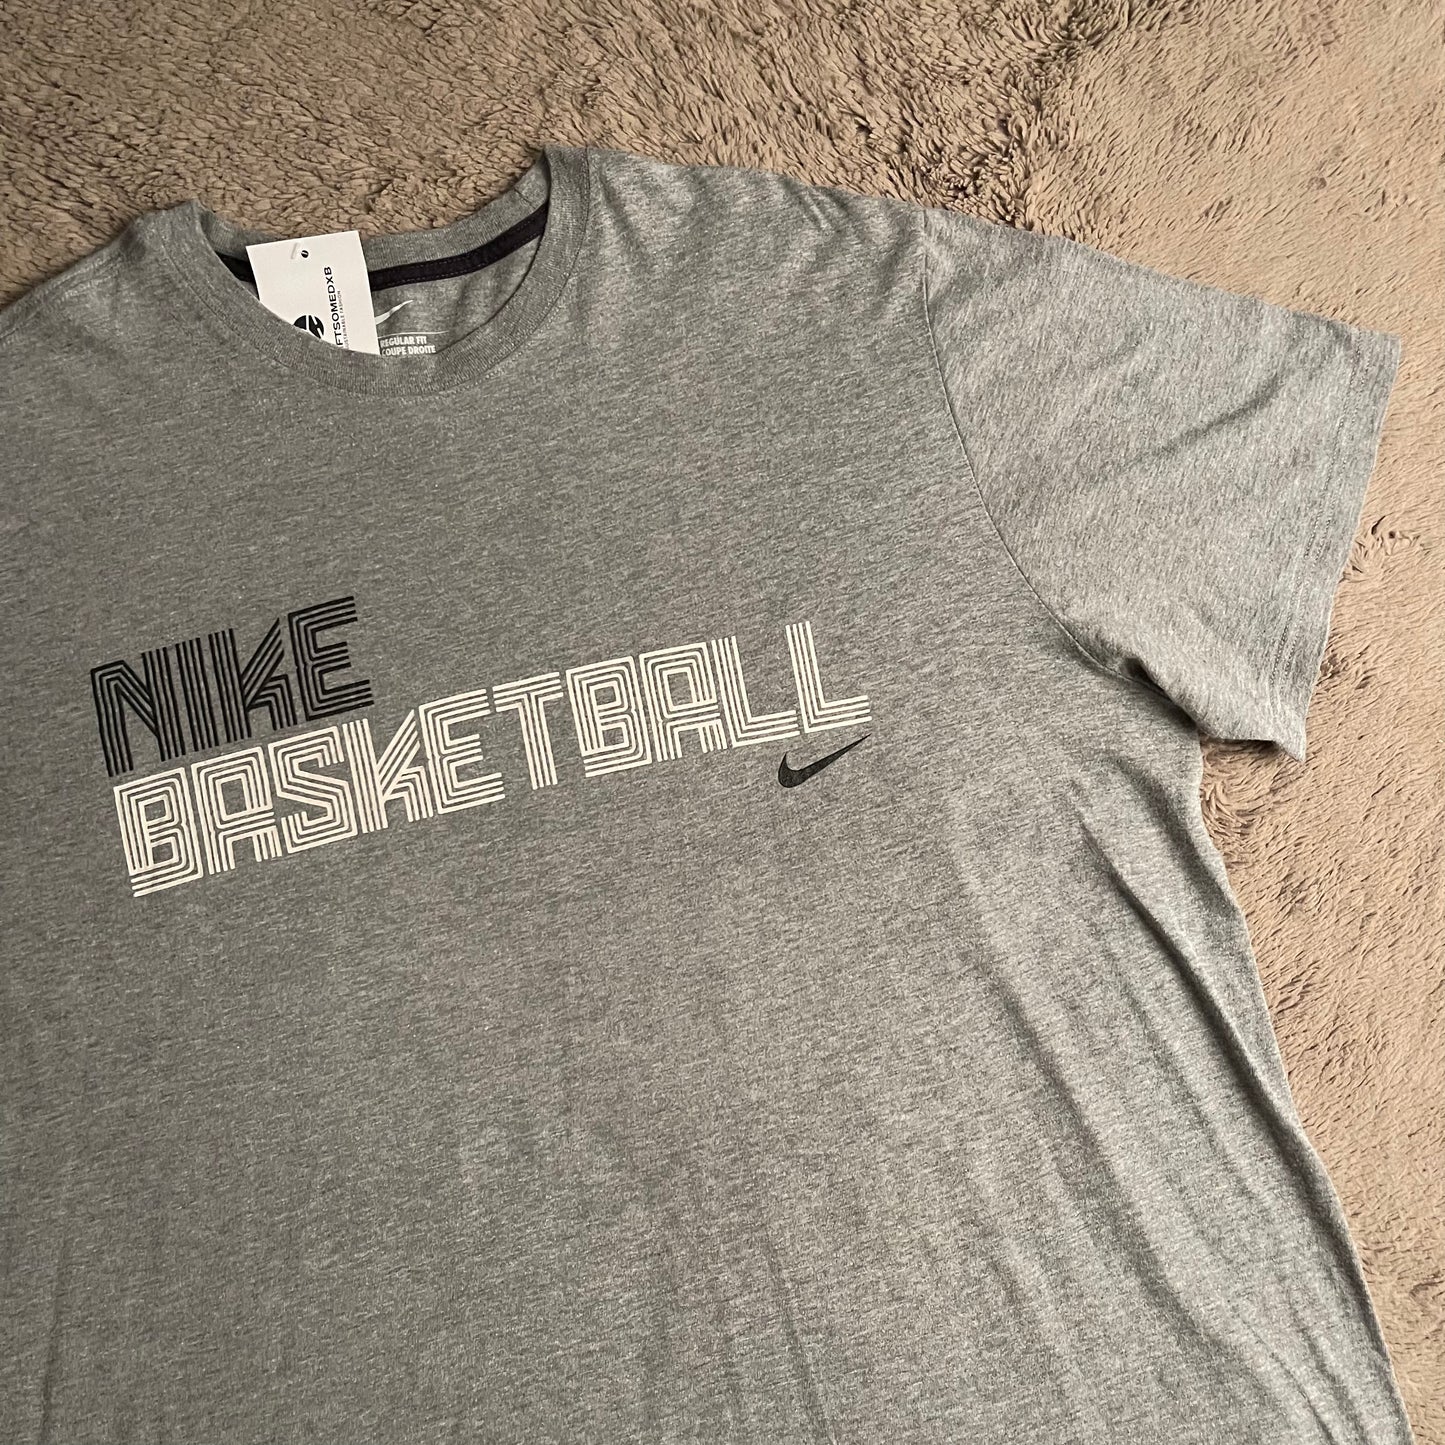 Nike Basketball Tee (L)